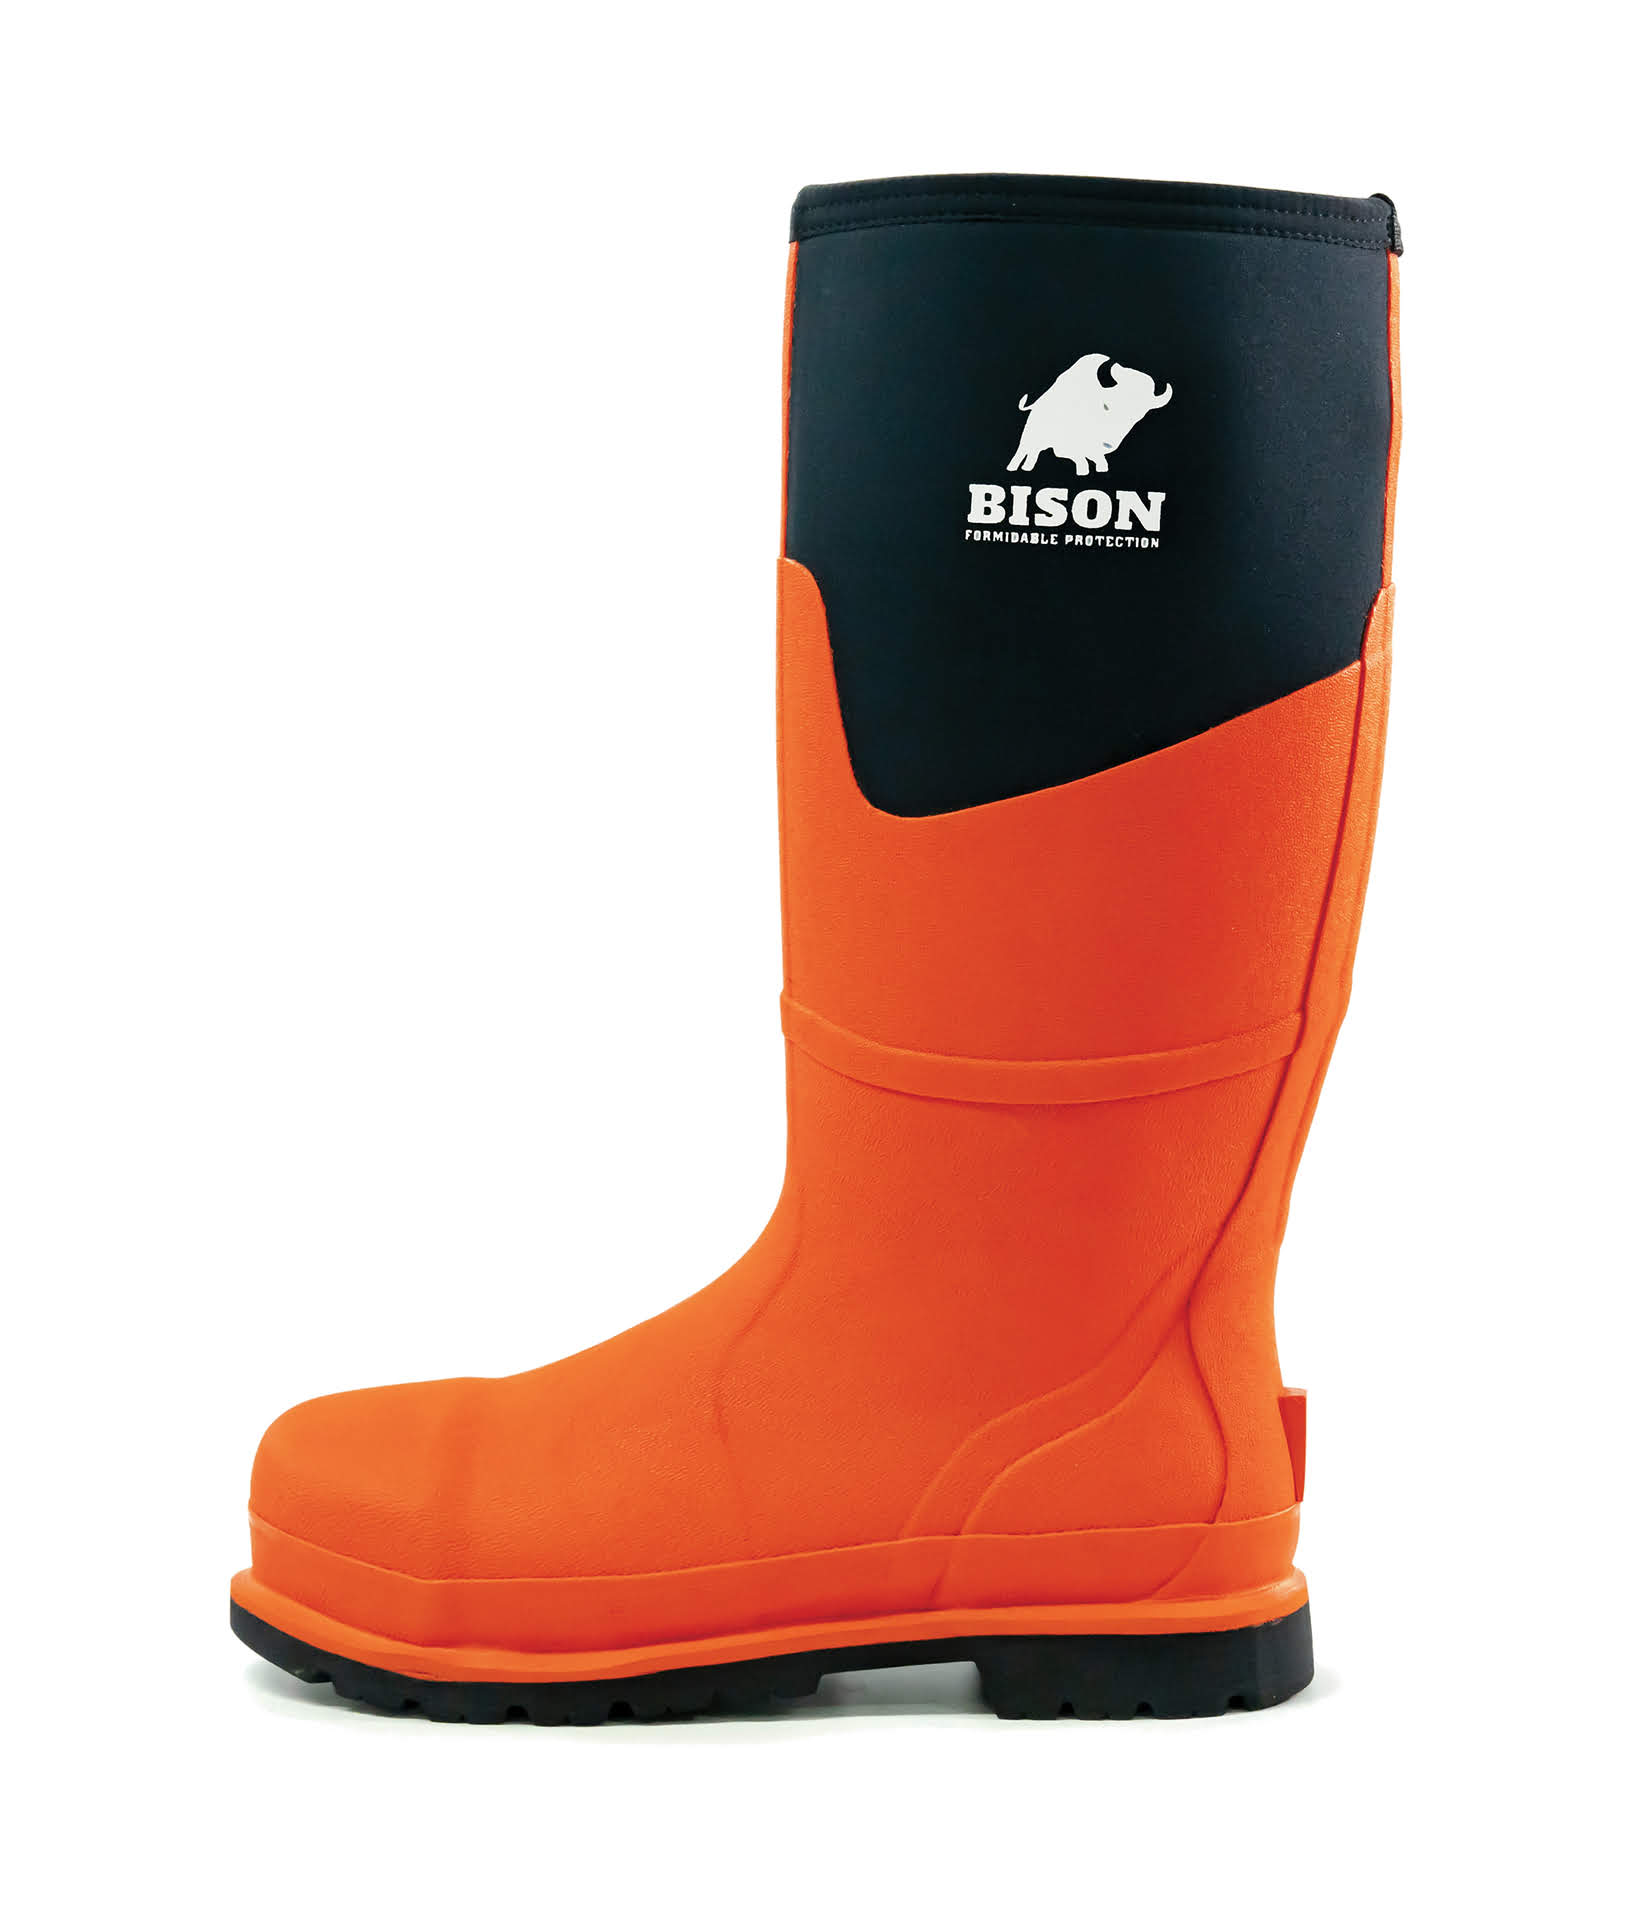 BISON NEO Rubber/Neoprene Safety Gumboot